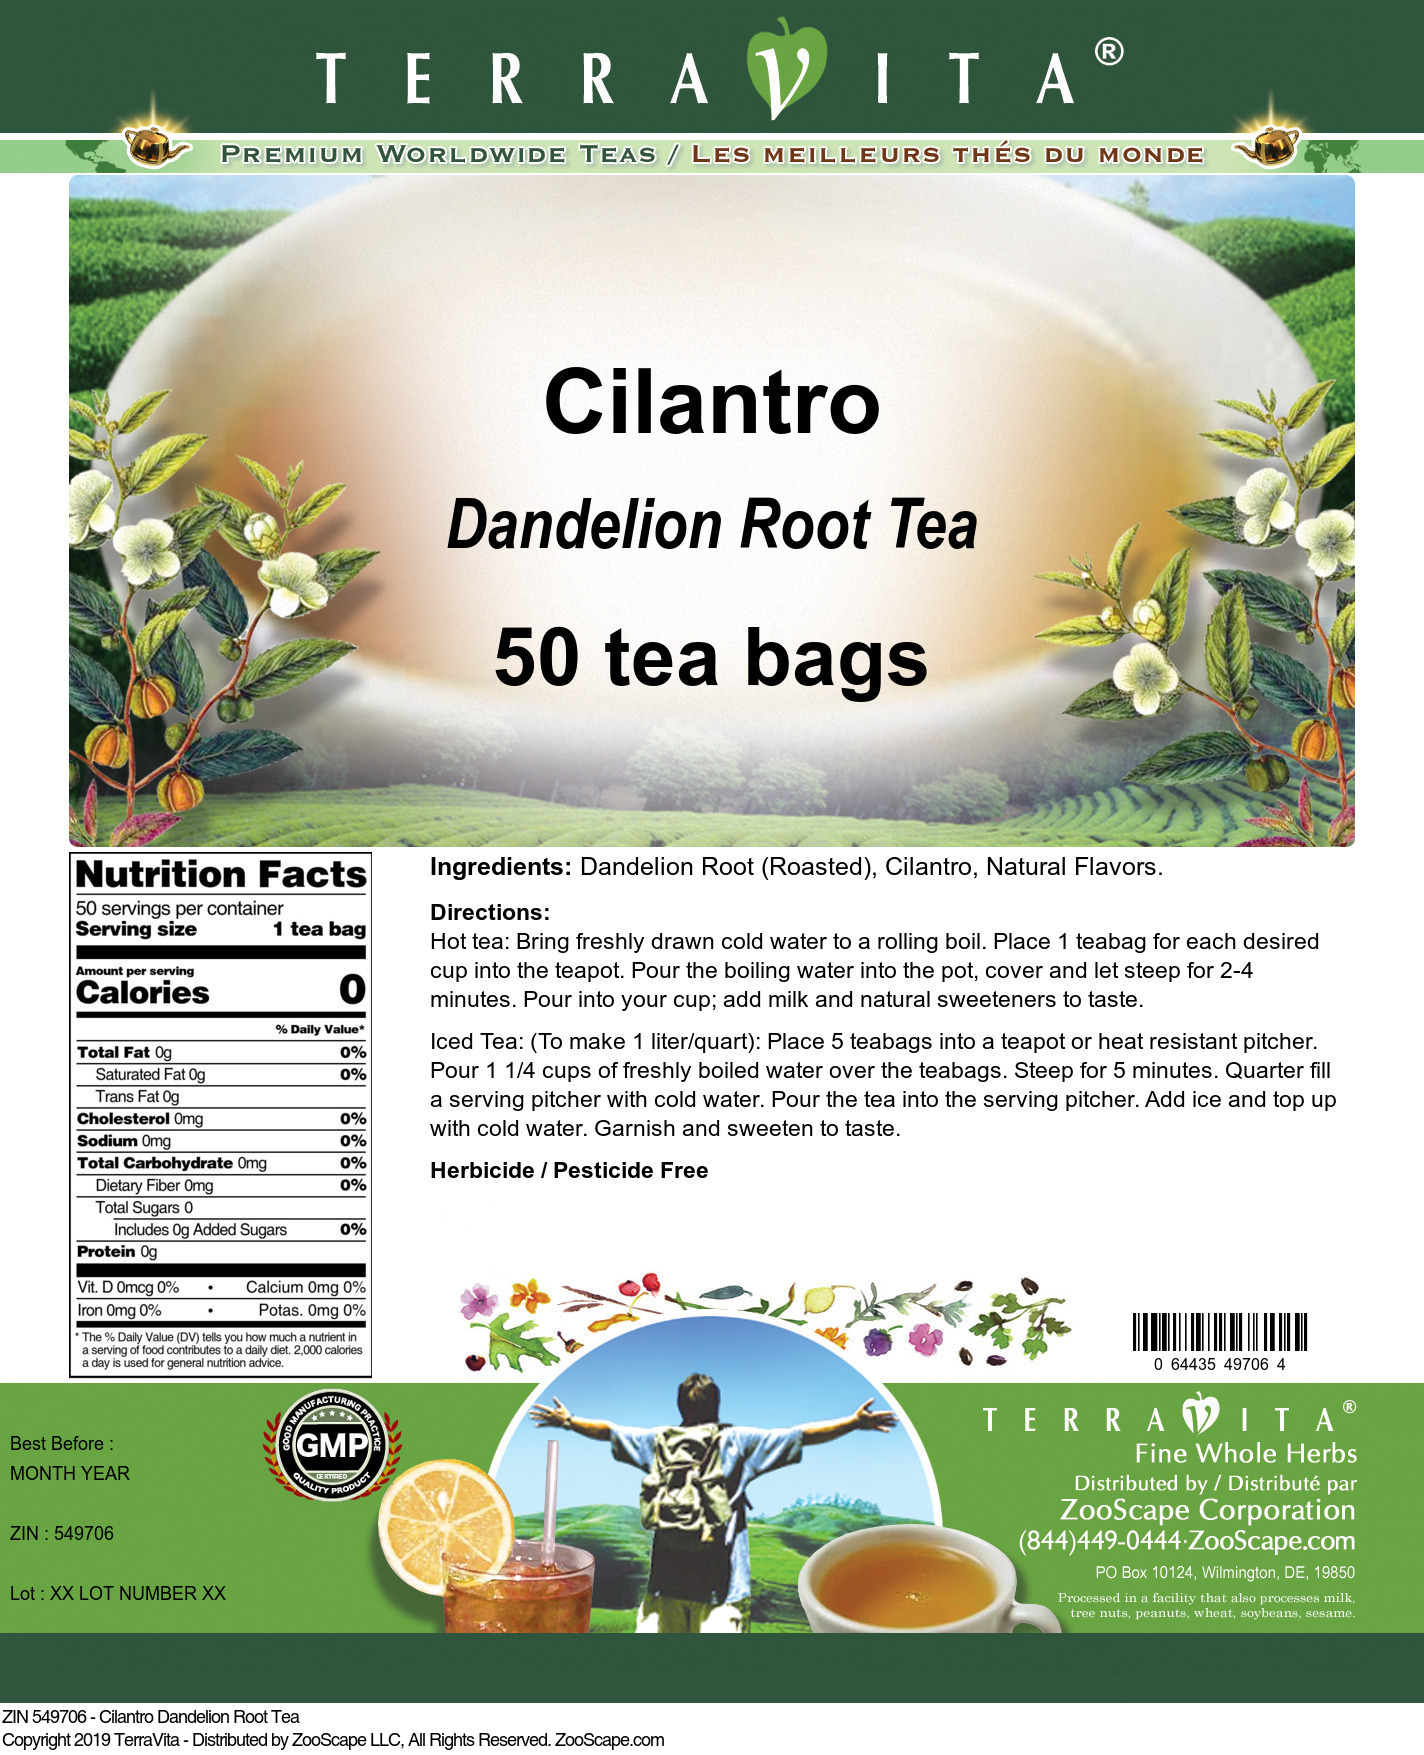 Cilantro Dandelion Root Tea - Label